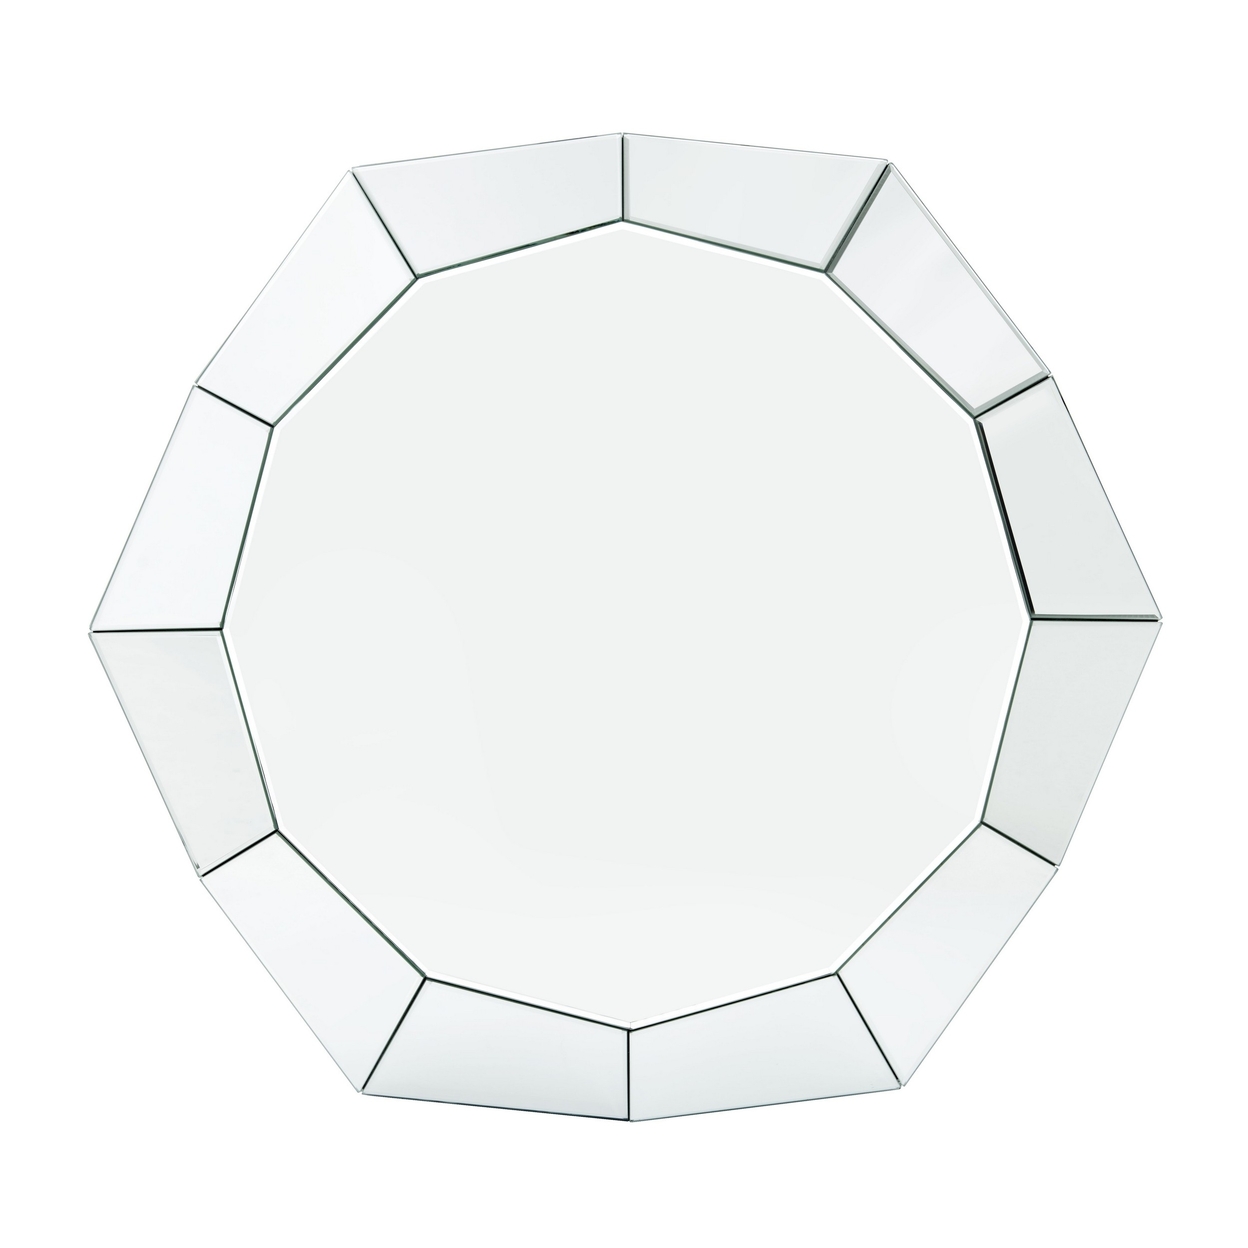 Mirror Octagonal Shape Coffee Table With Faux Diamond Inlays, Silver- Saltoro Sherpi